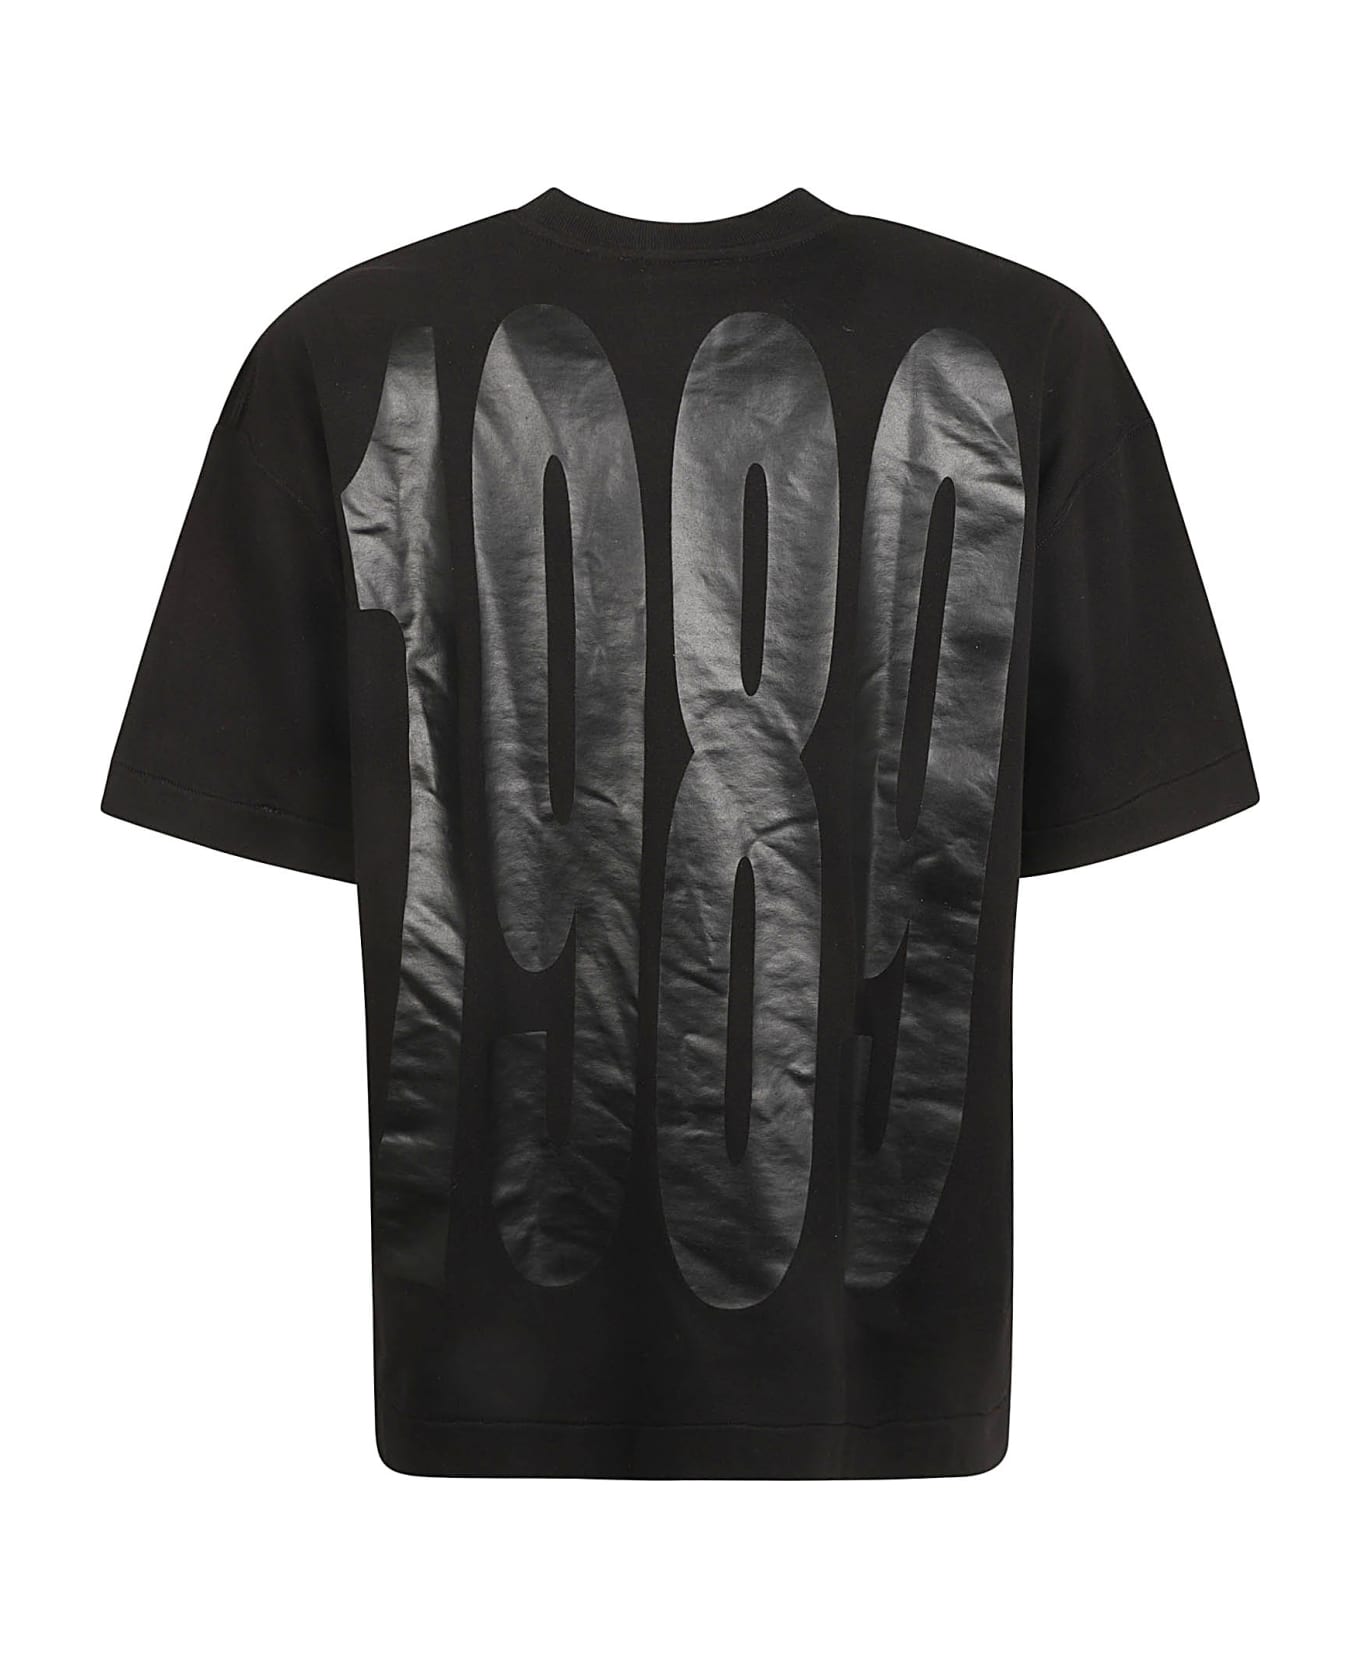 1989 Studio On God T-shirt - Black